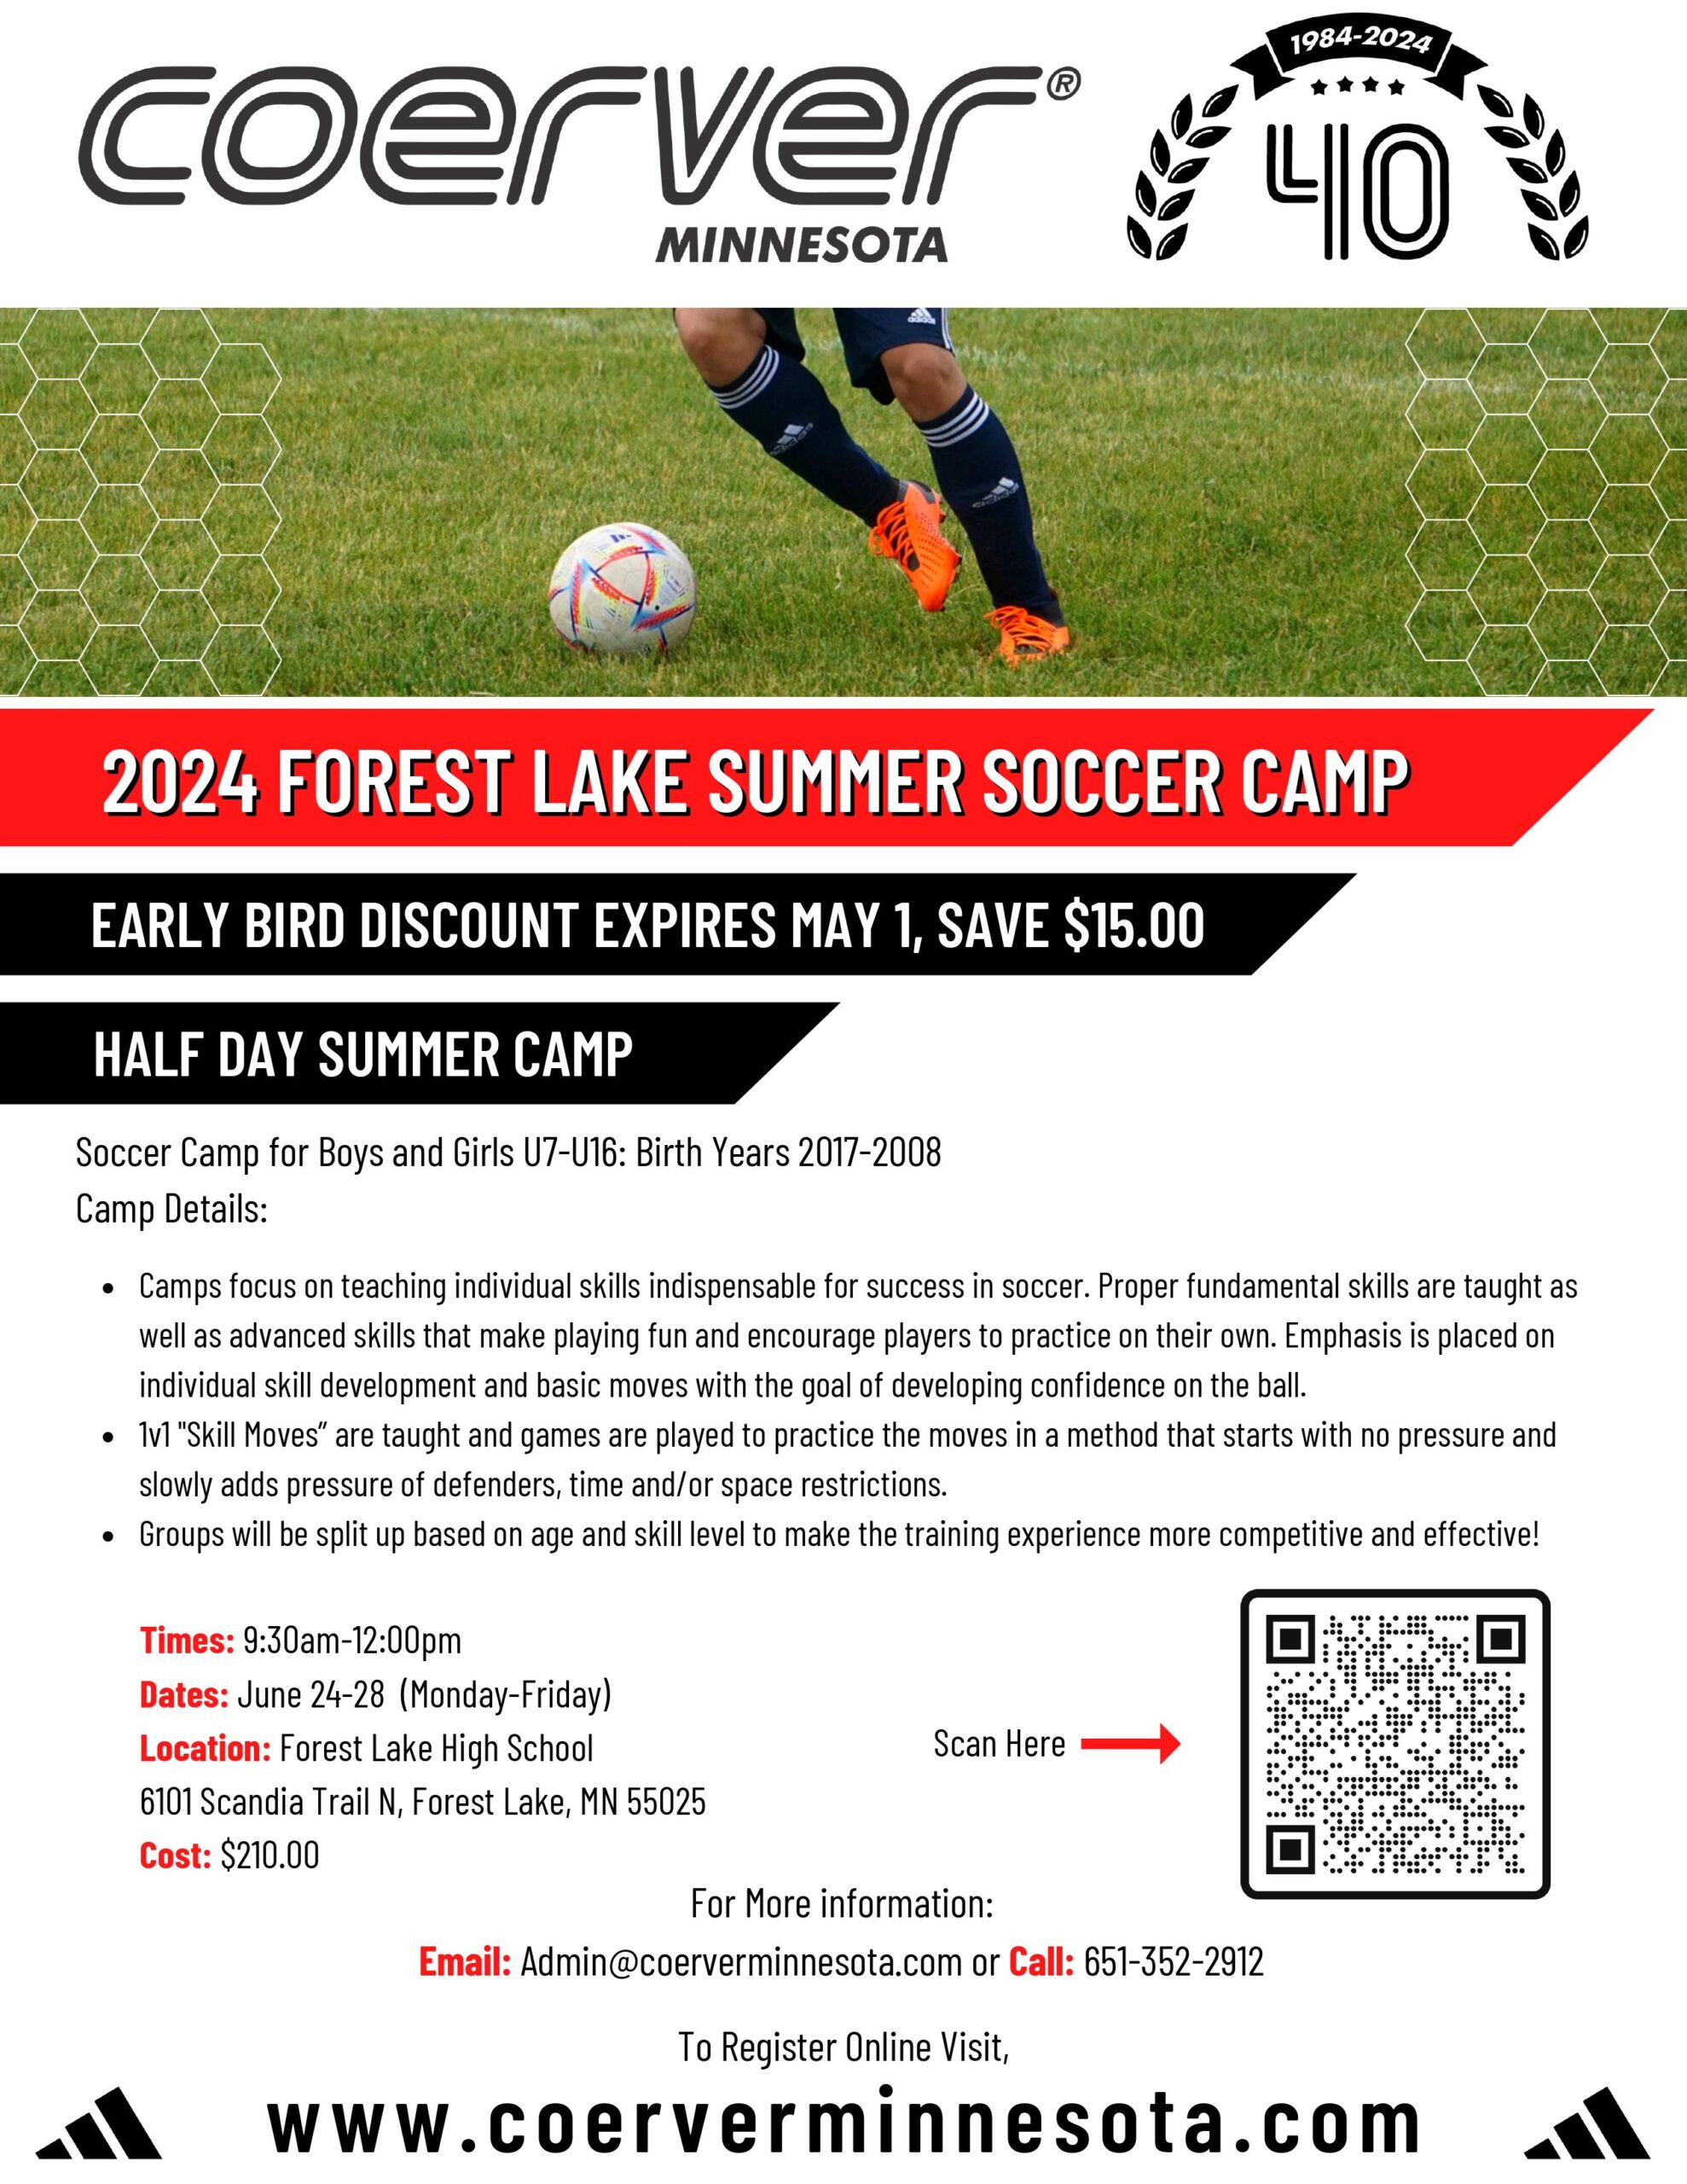 2024 Forest Lake Summer Camp Flyer